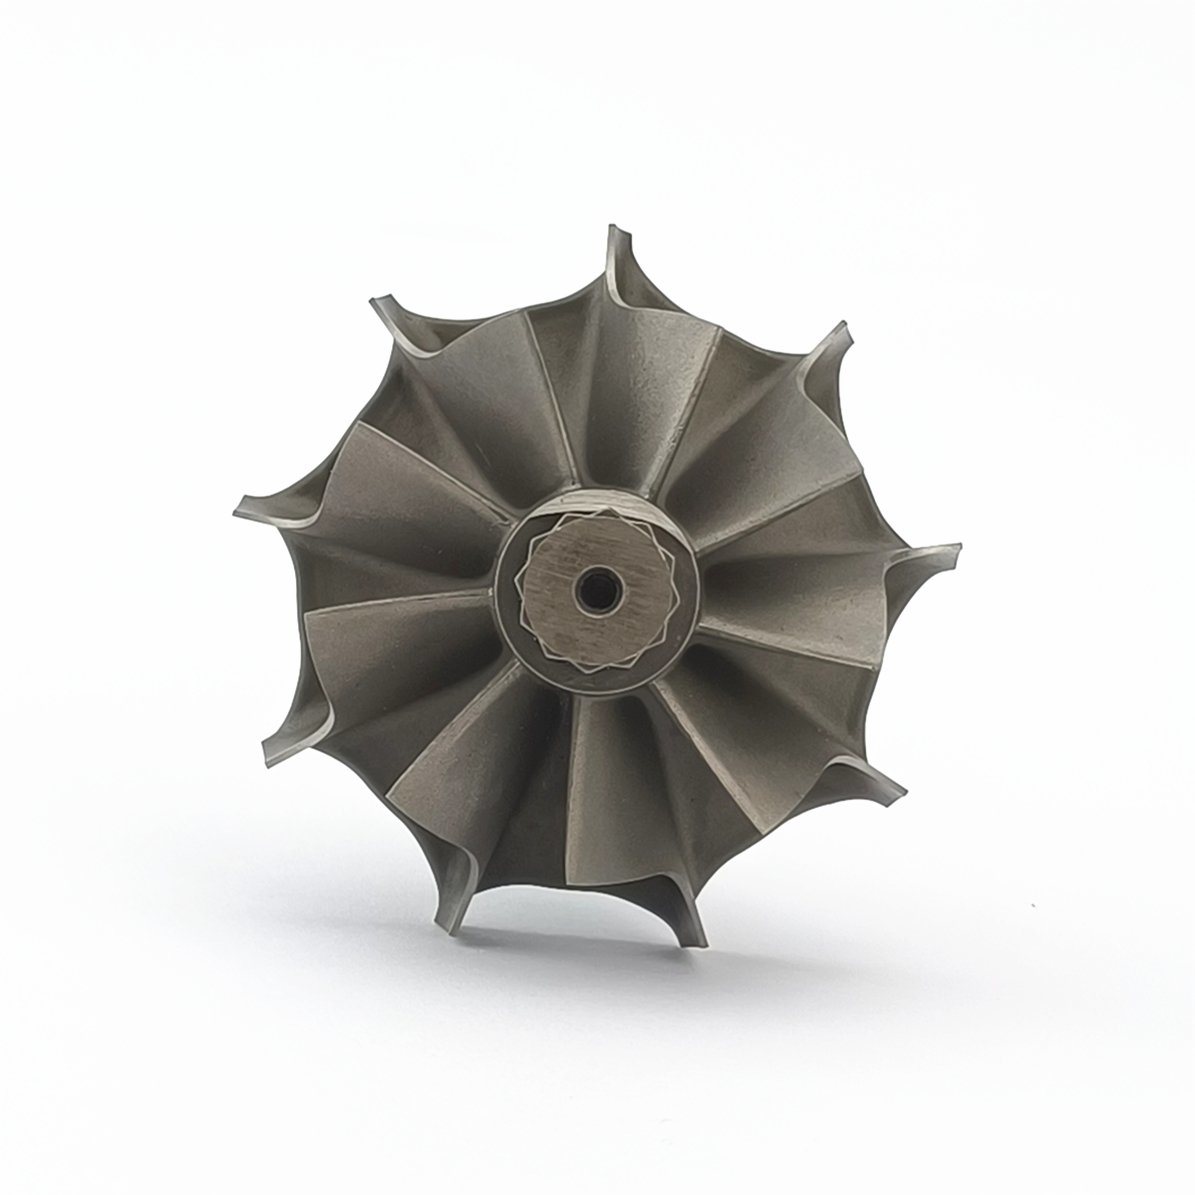 Rhf5h Ind 53mm Exd 40.1mm Turbine Wheel Shaft for Turbocharger